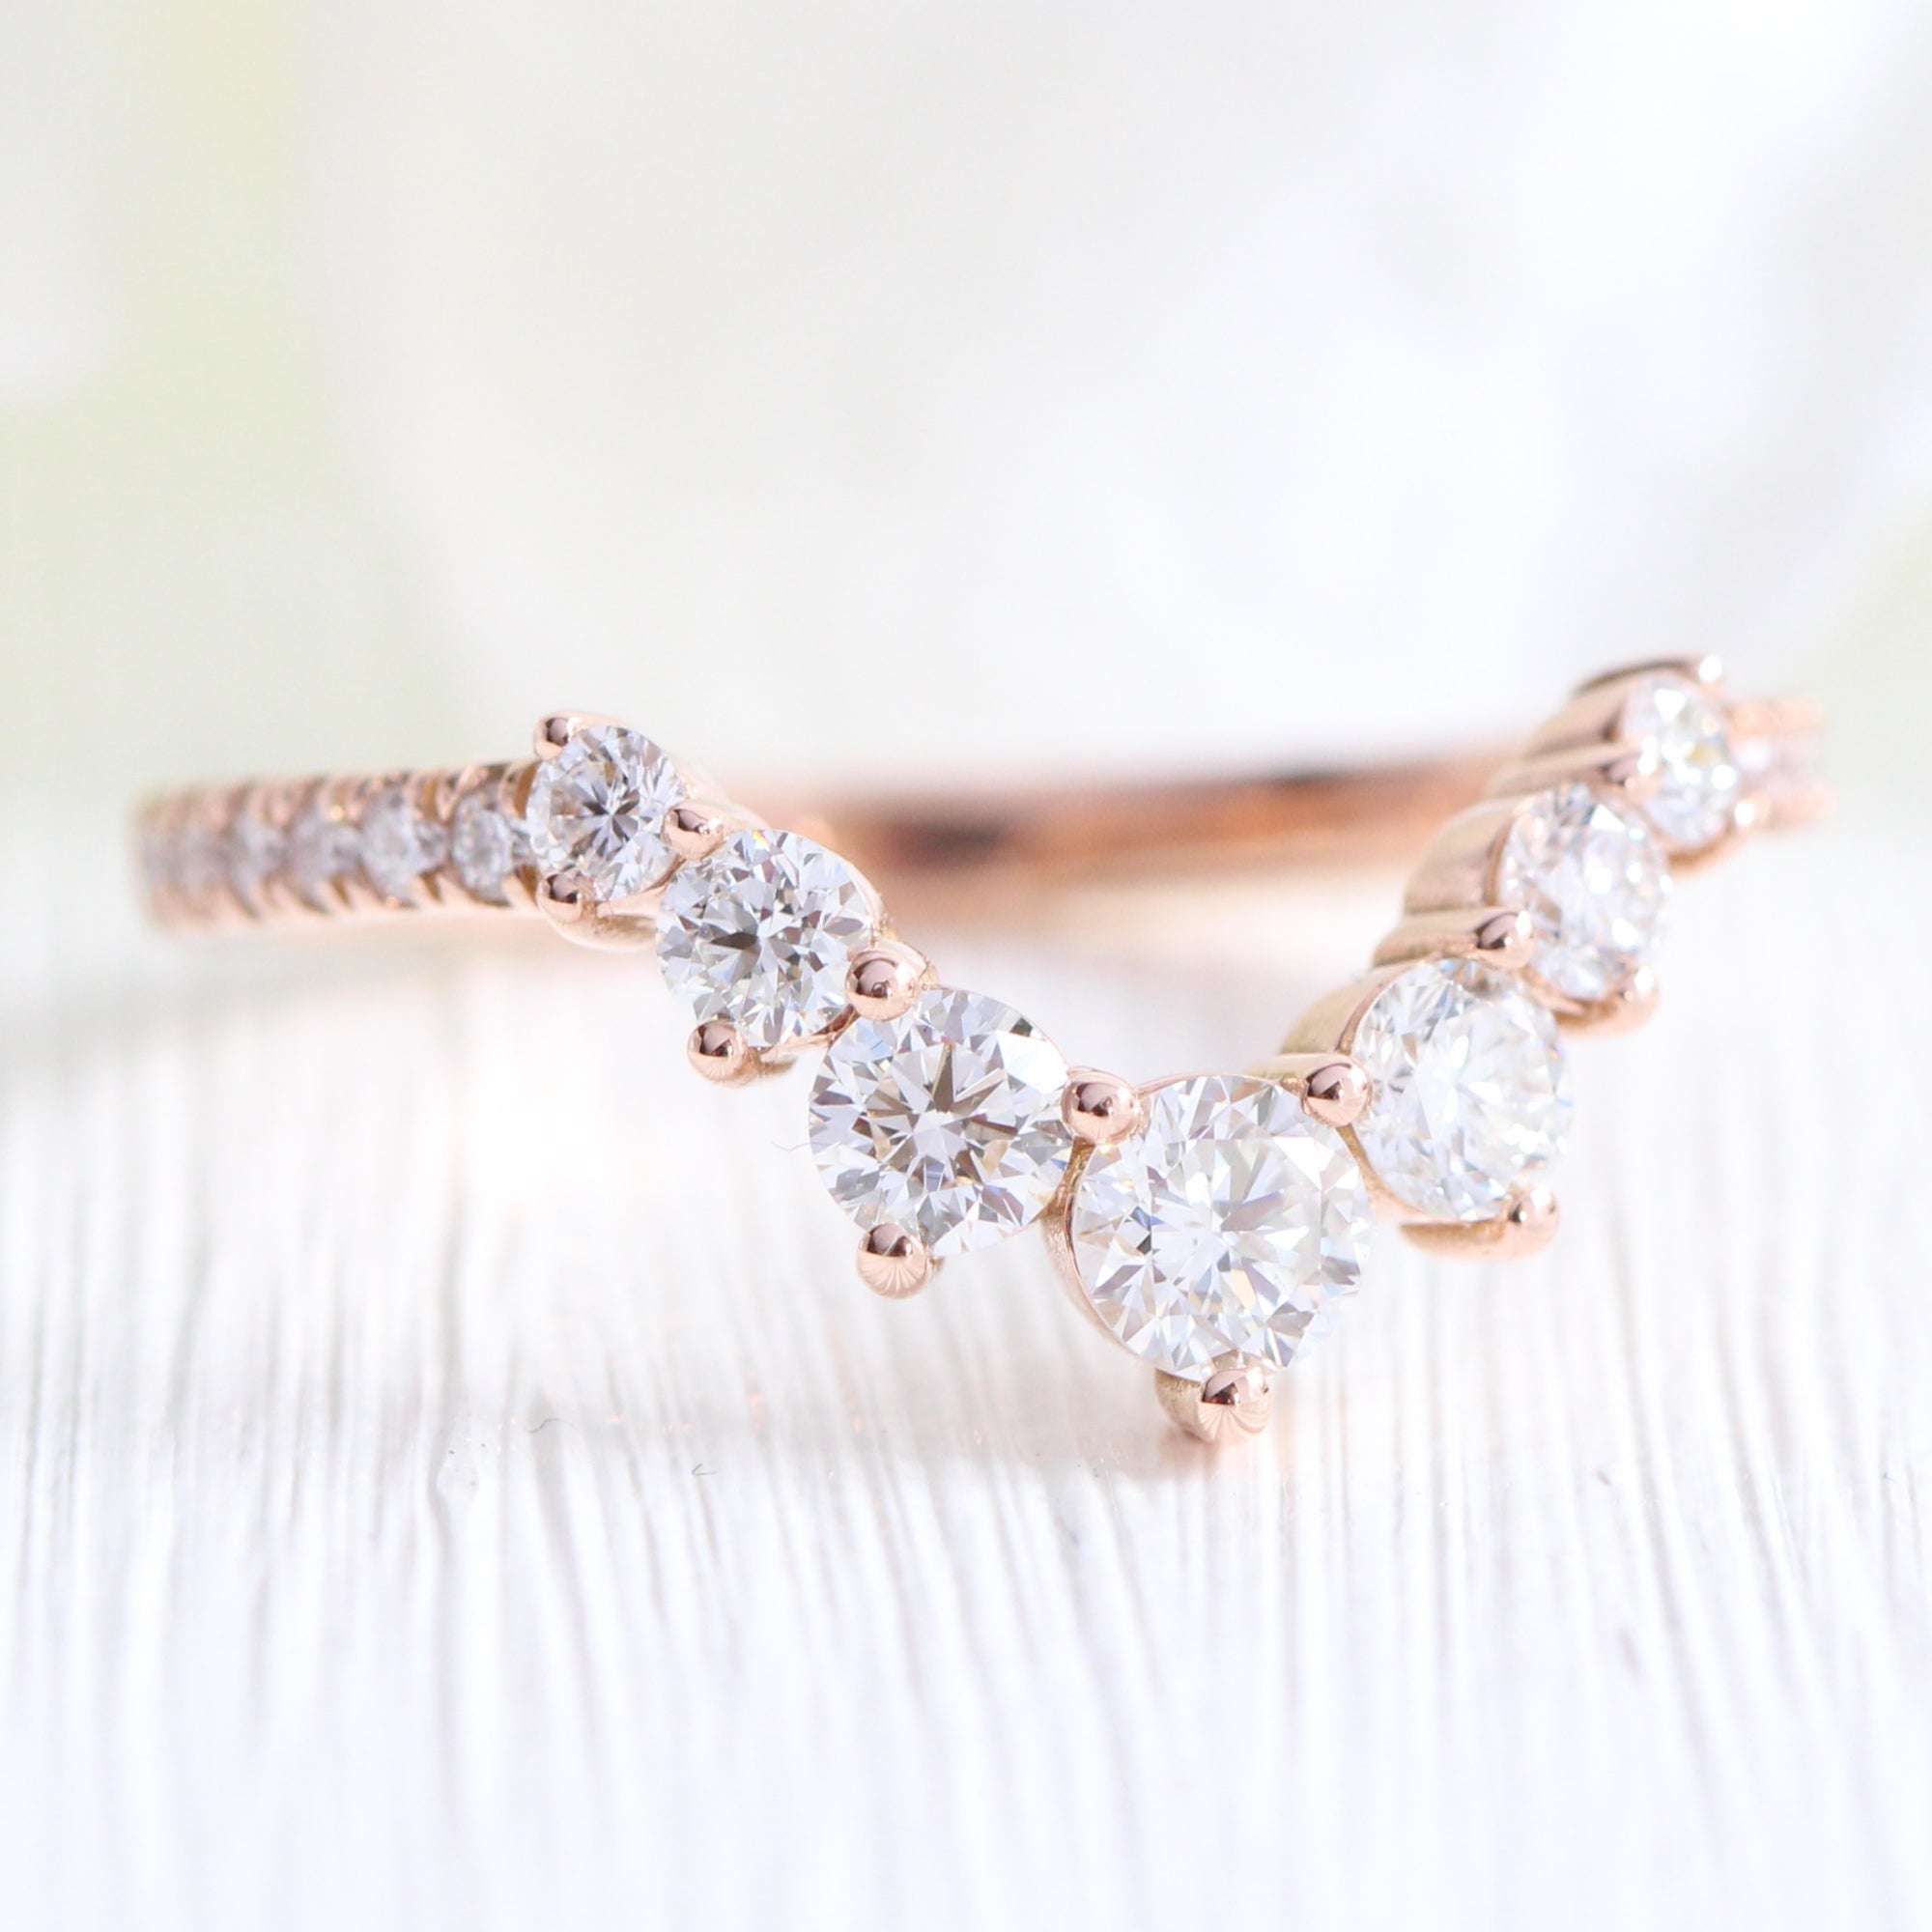 Large 7 diamond wedding band rose gold pave diamond ring la more design jewelry